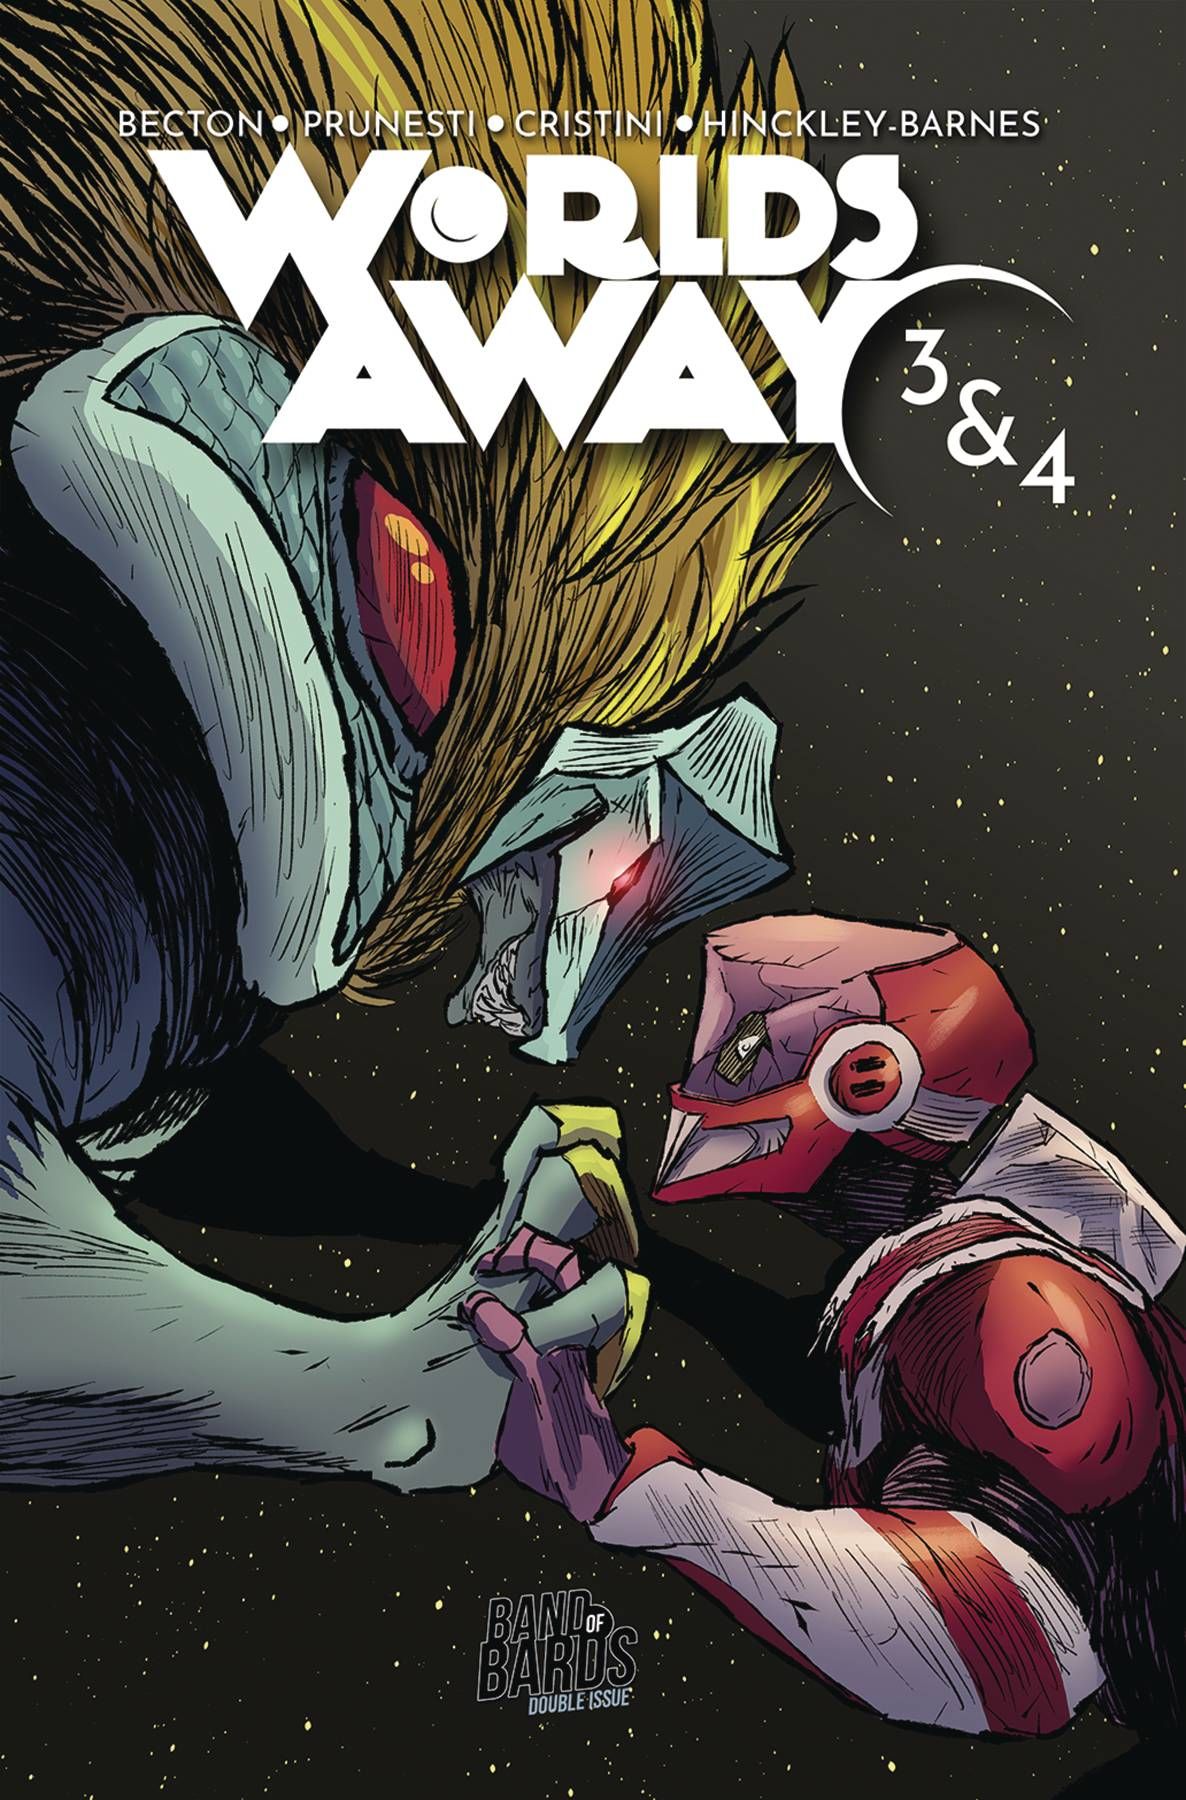 Worlds Away #3 & 4 Comic